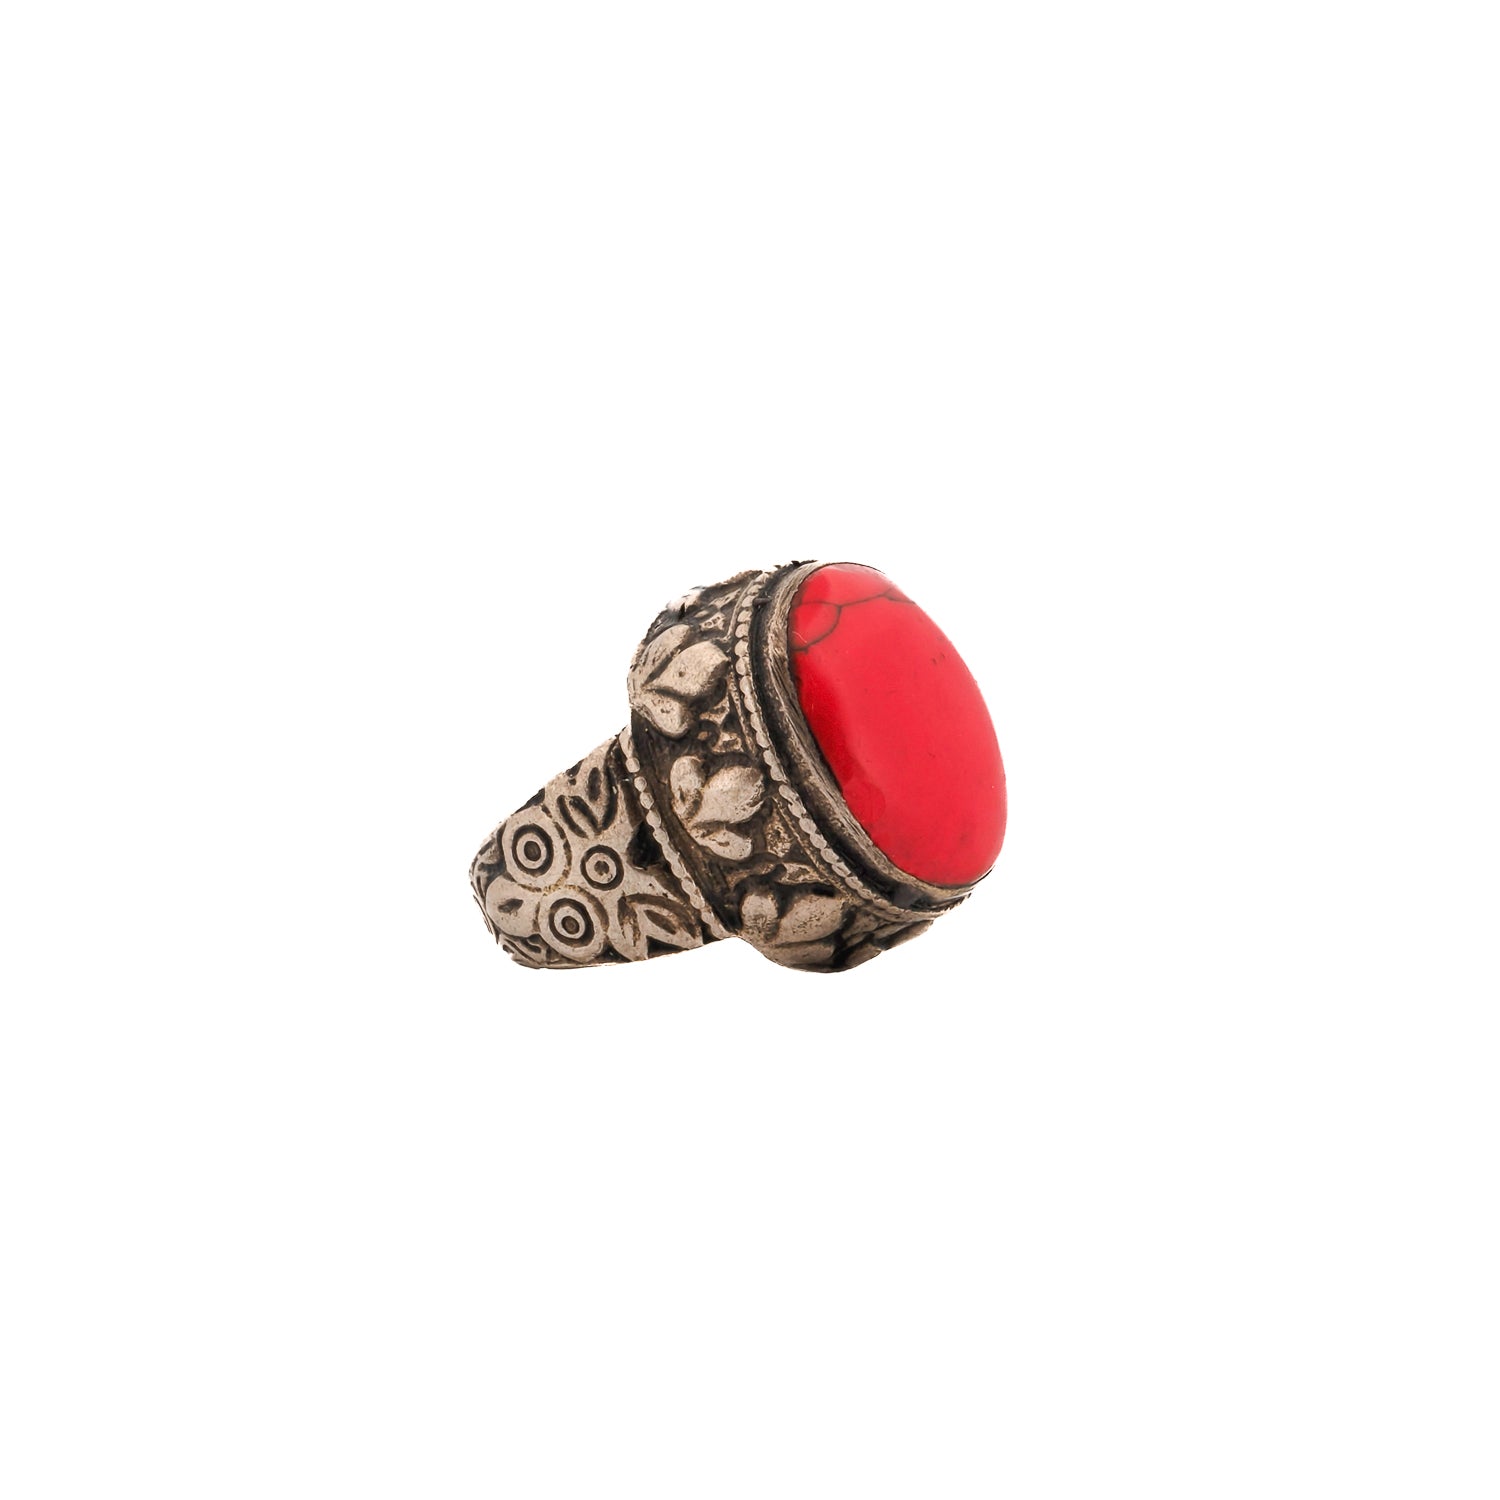 Red Coral Gemstone Vintage Silver Ring